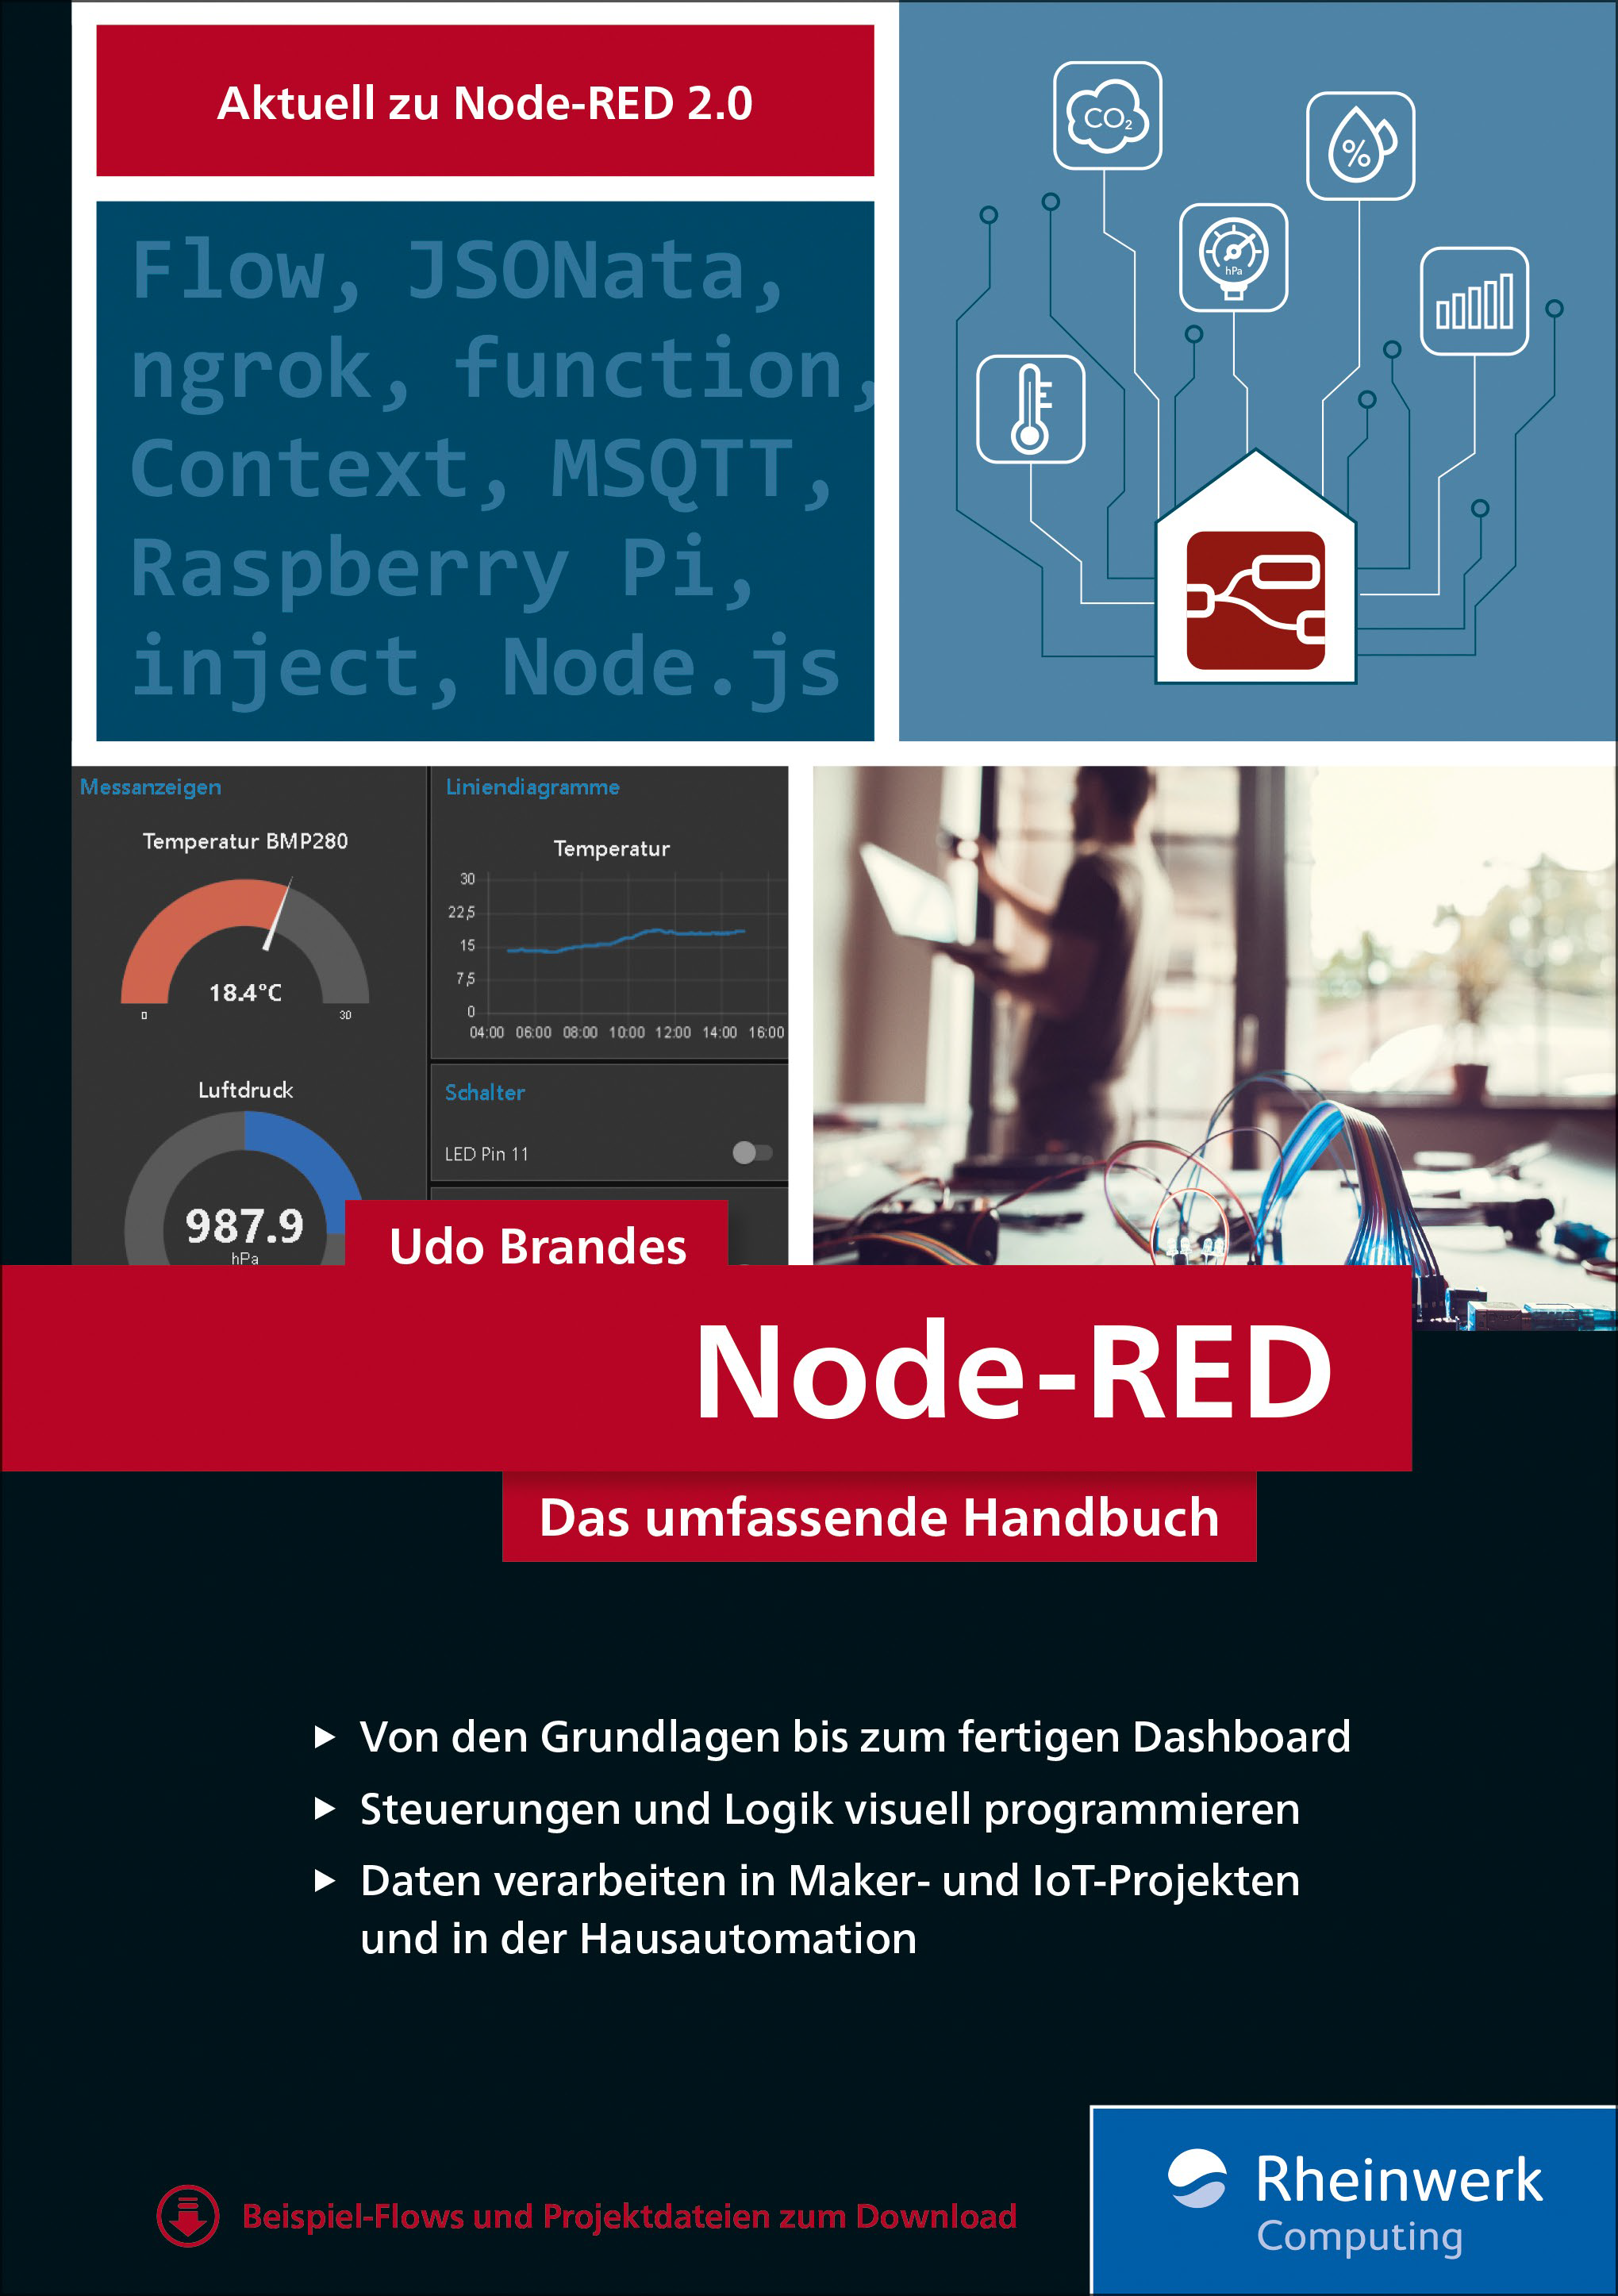 Bundle: Make Node-RED Special (Heft+PDF+Buch)